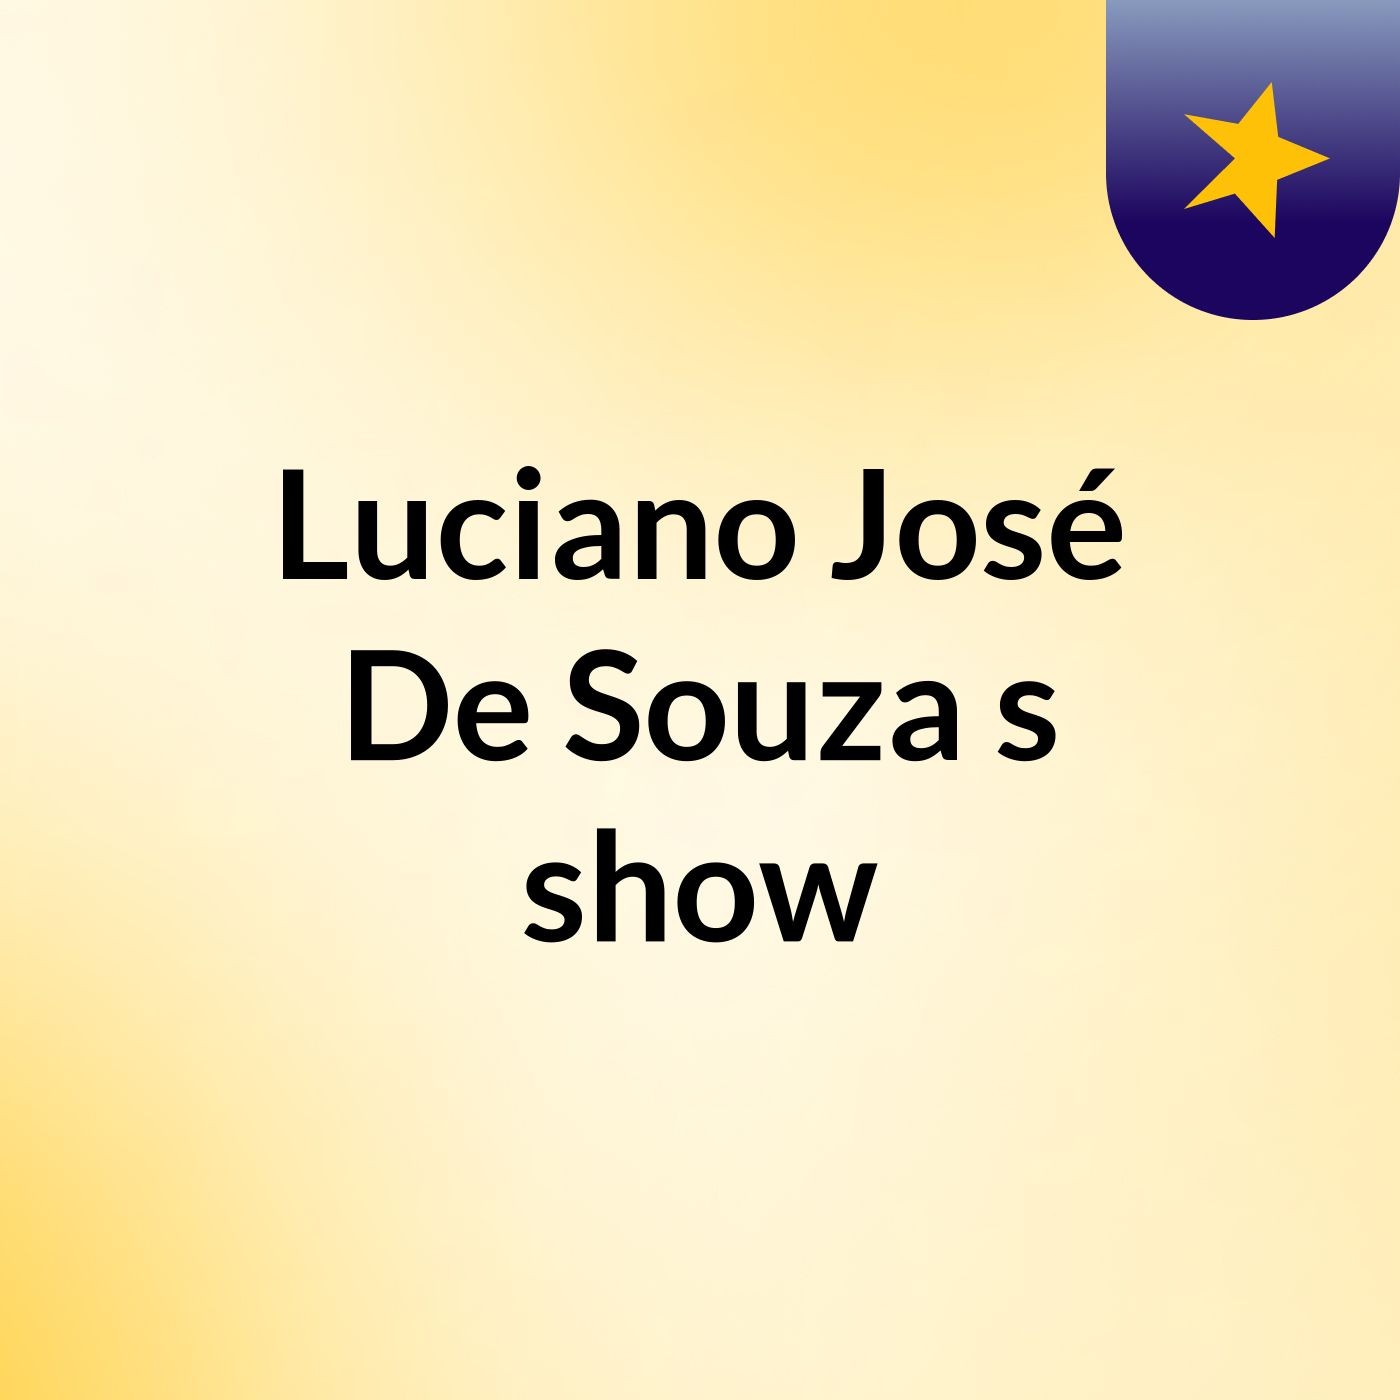 Luciano José De Souza's show